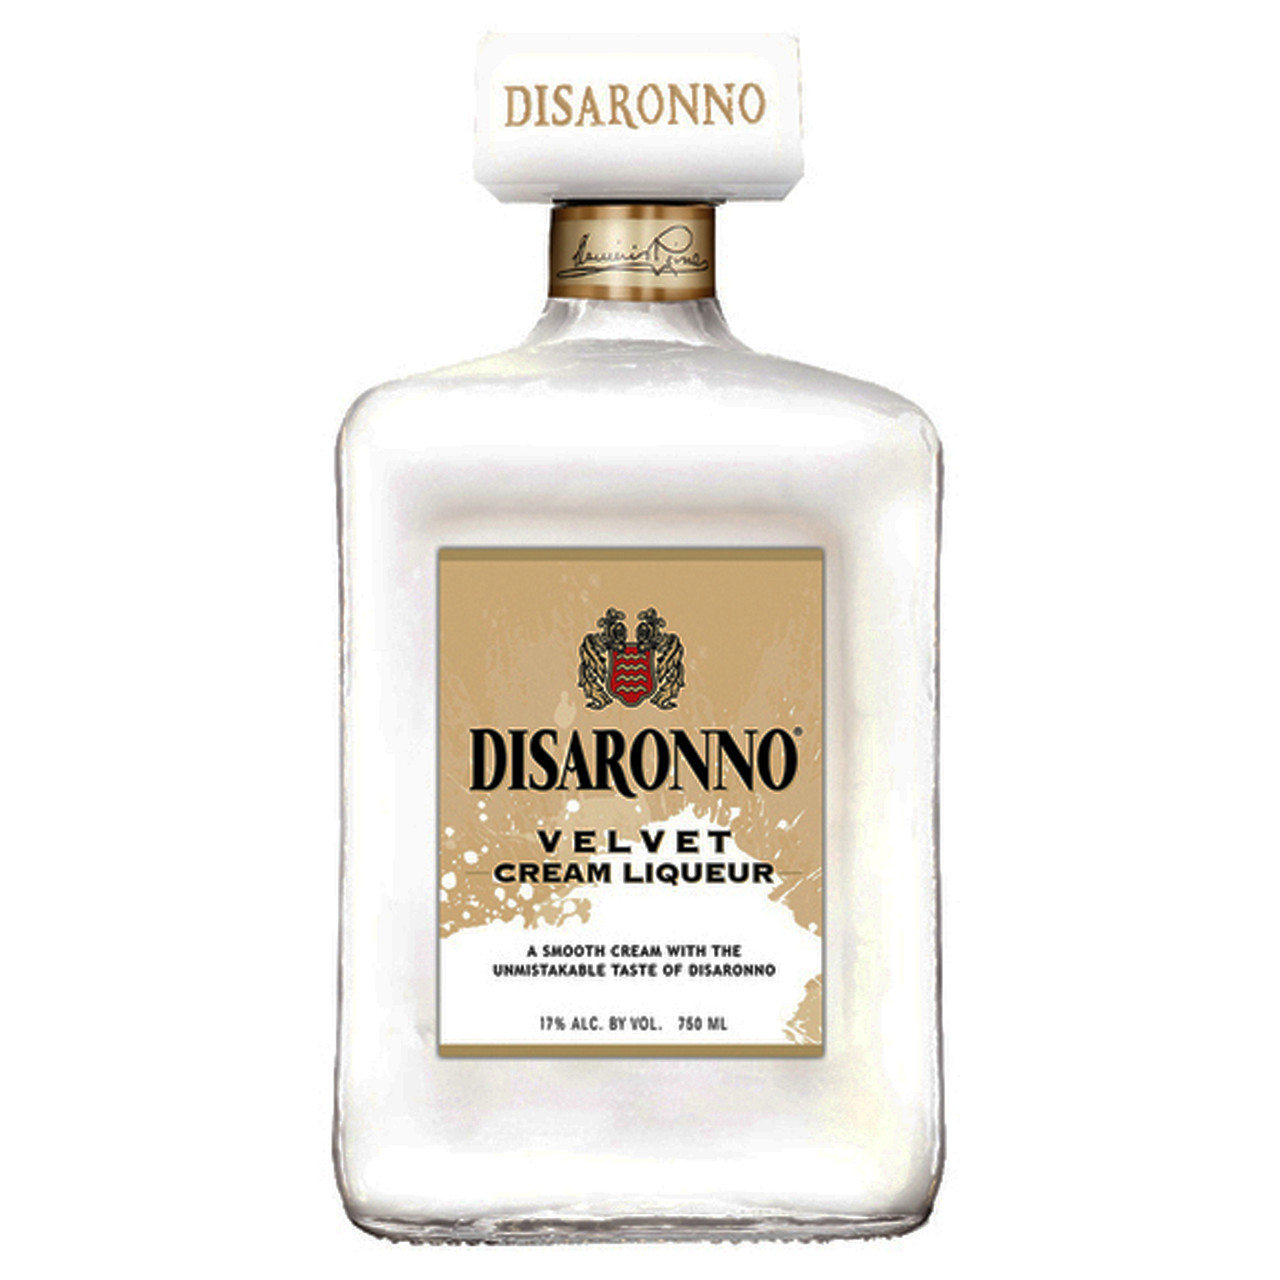 Disaronno Originale Amaretto - Iconic Italian Liqueur, Sweet and